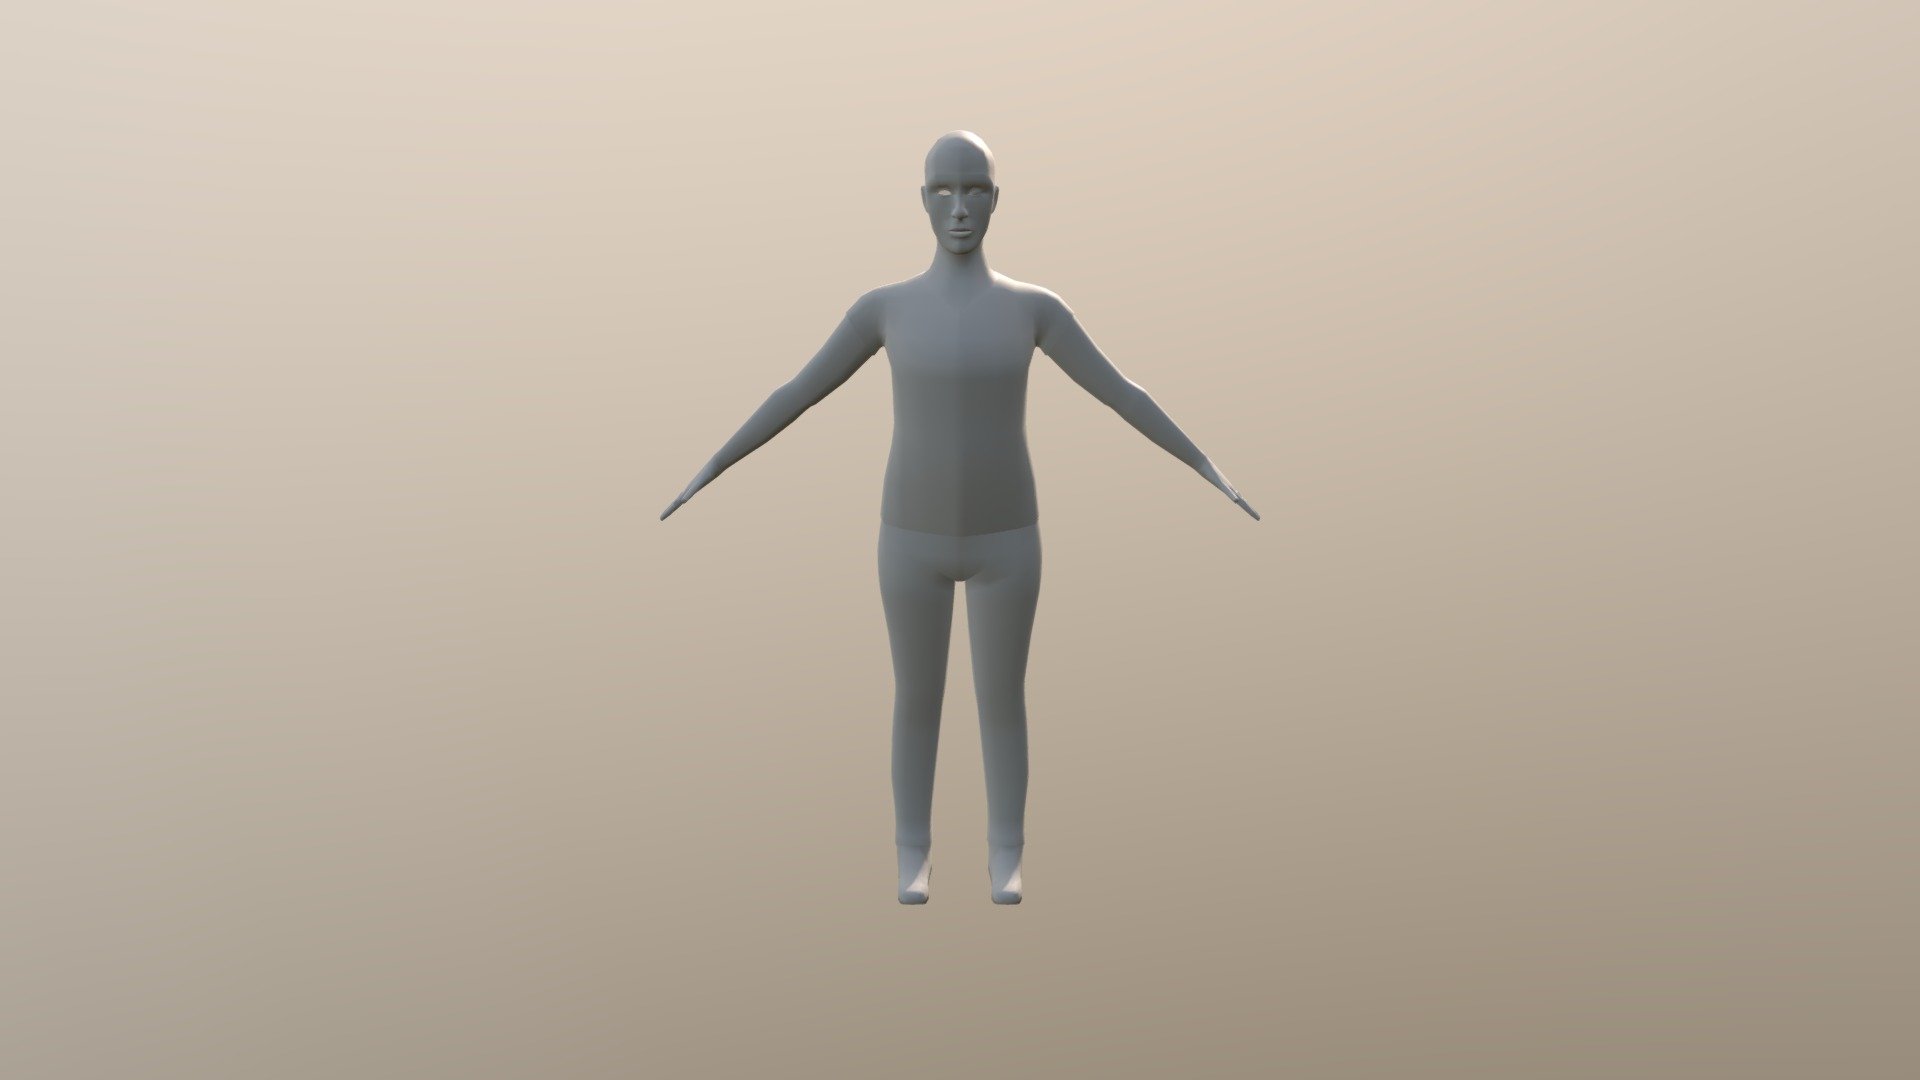 Full Model: Head and Body